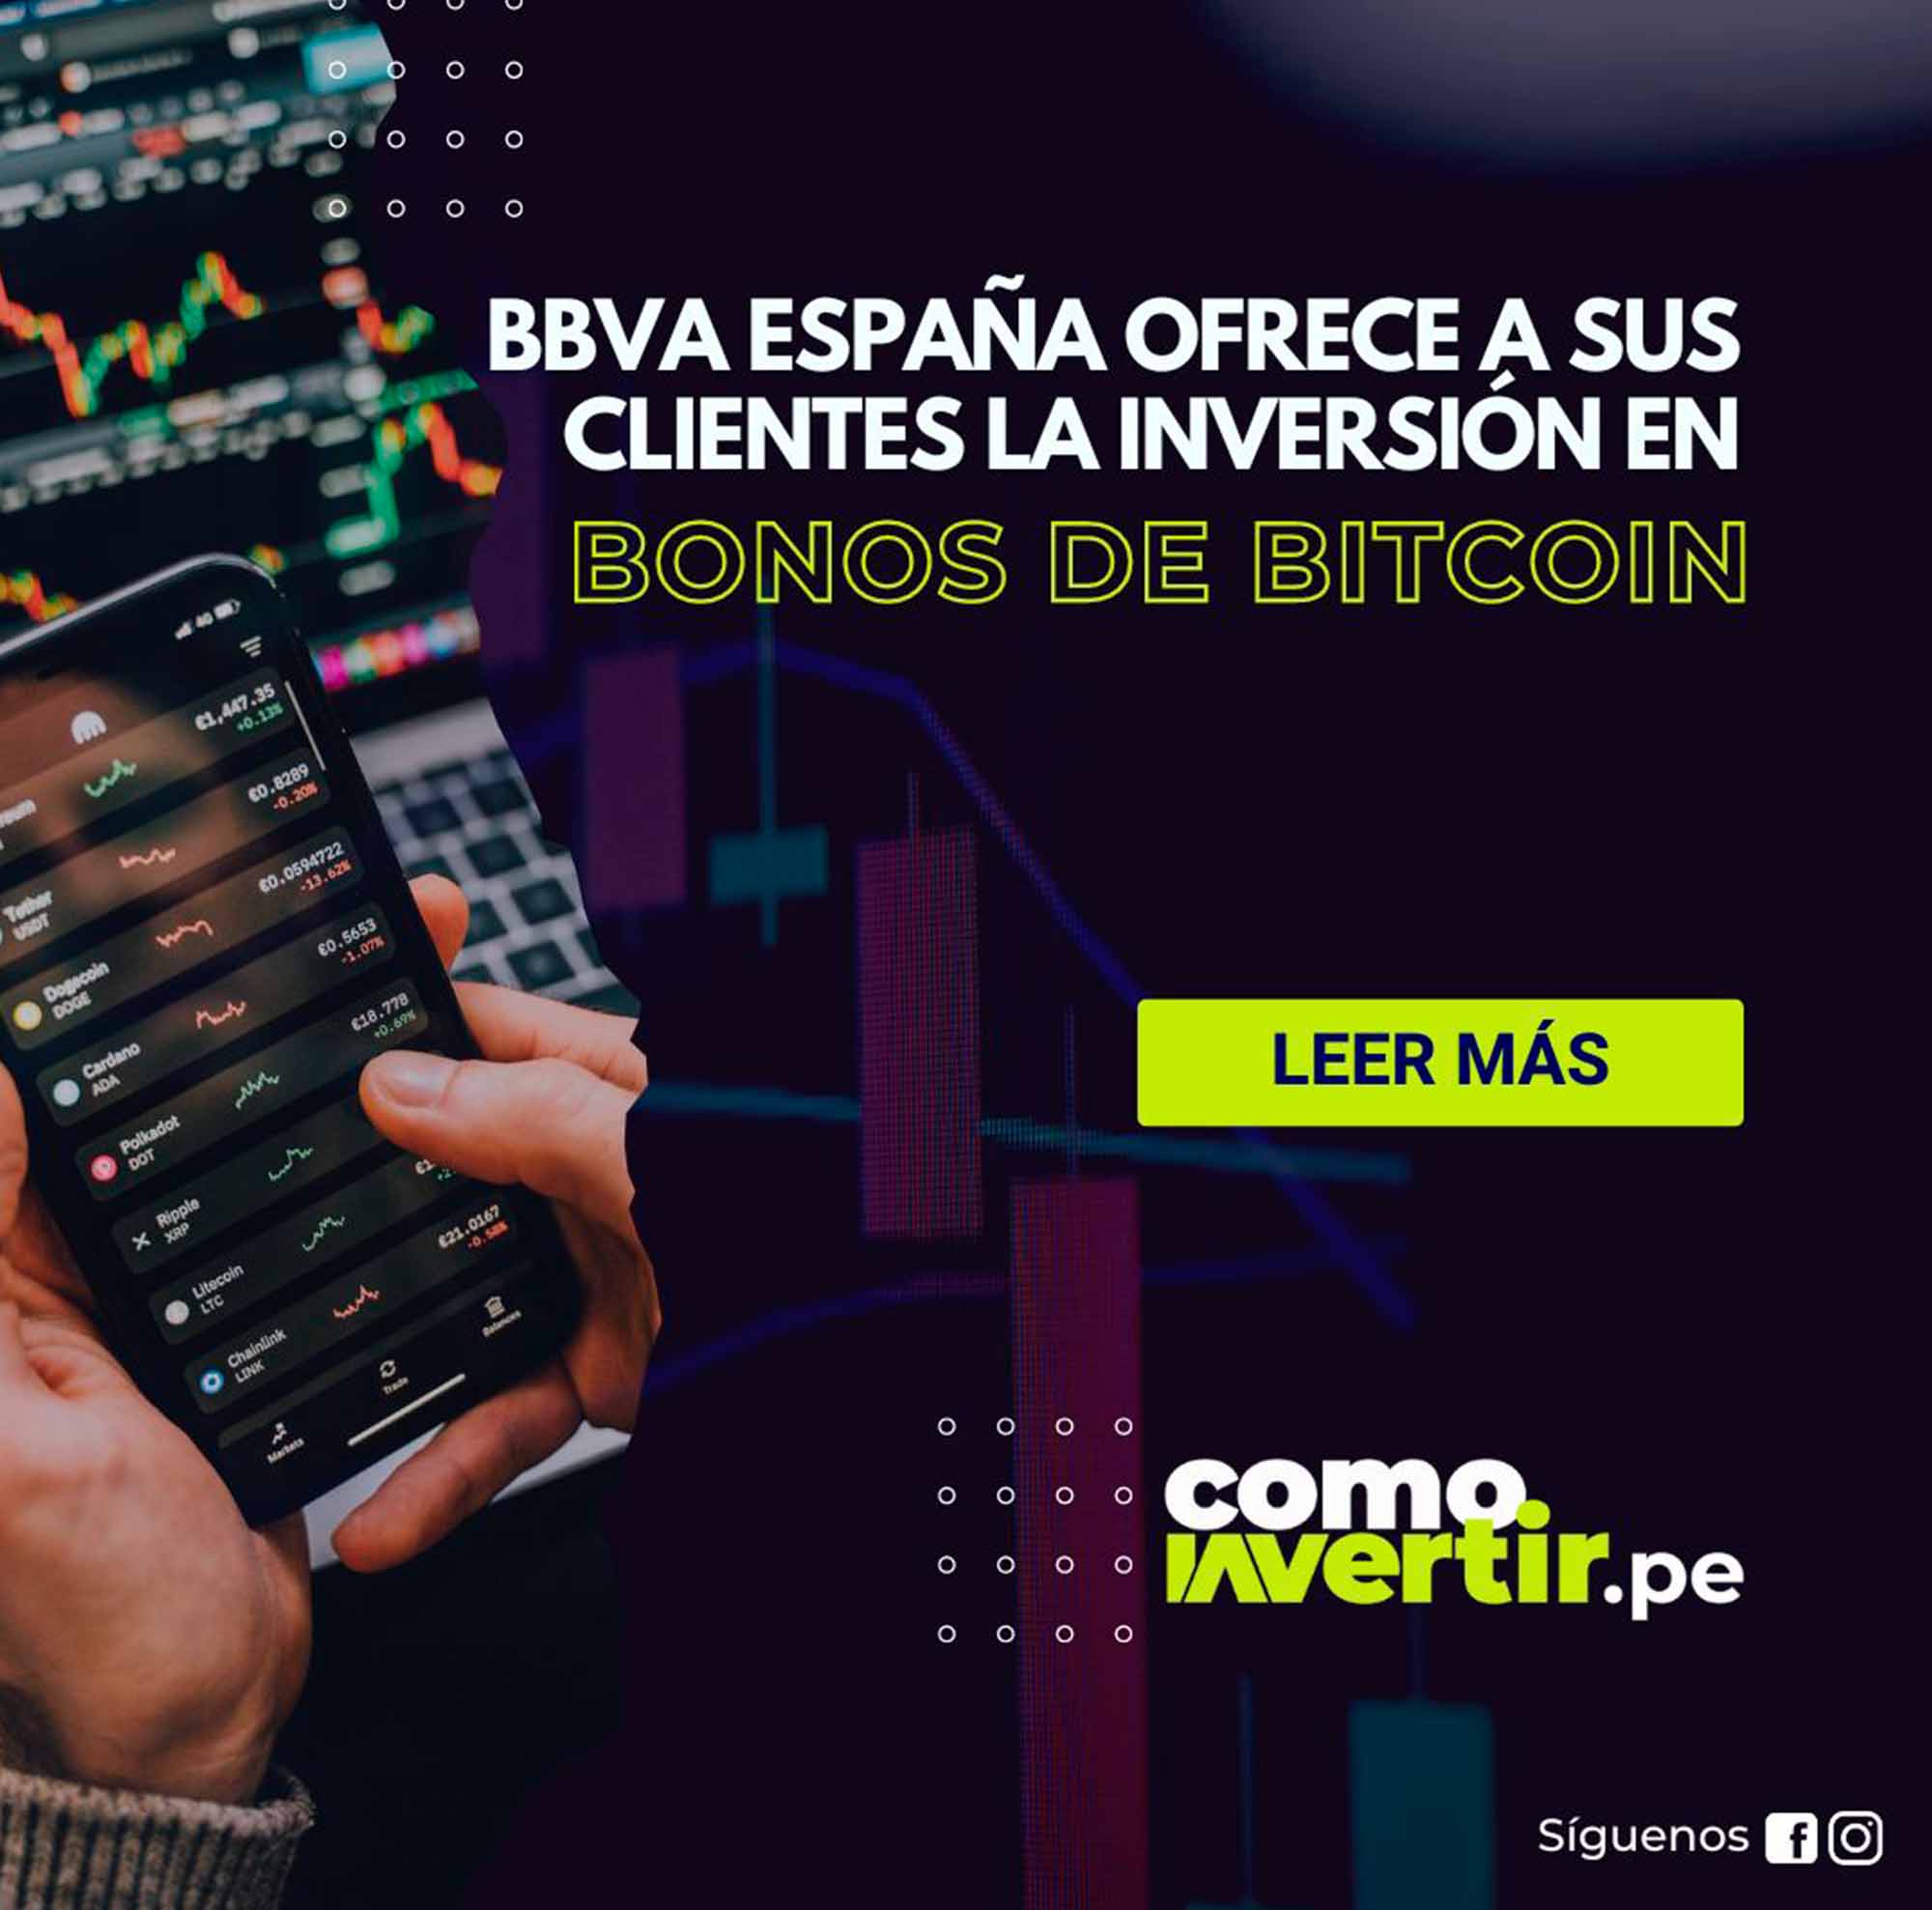 BBVA España ofrece a sus clientes la inversión en bonos de Bitcoin